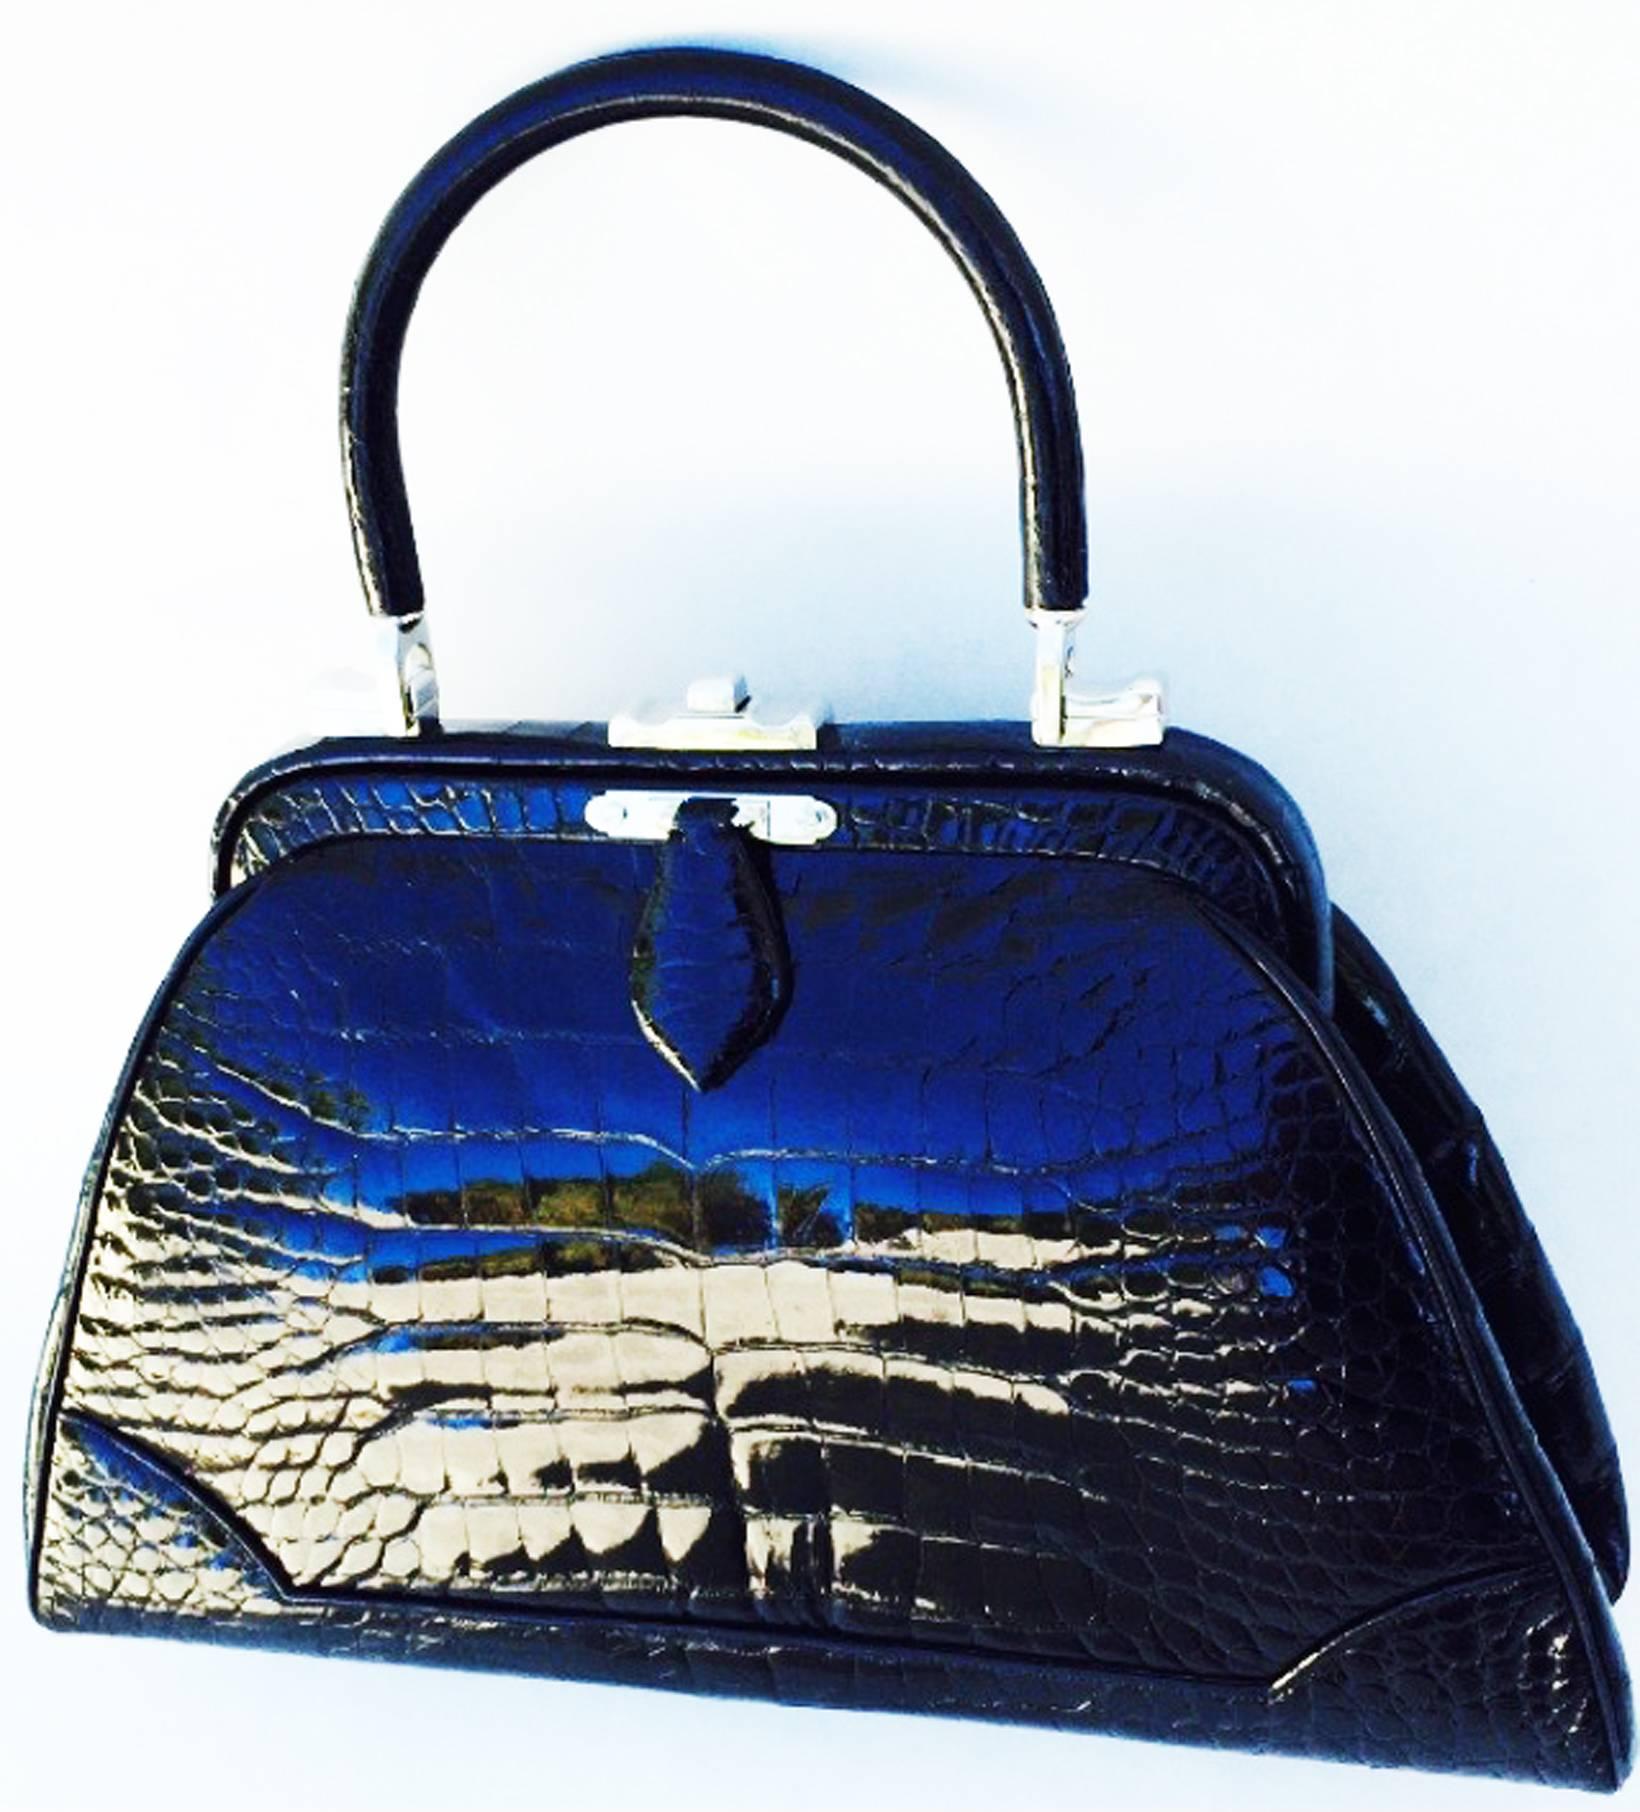 Exquisite Judith Leiber Porosus Crocodile Handbag 1960s For Sale 3